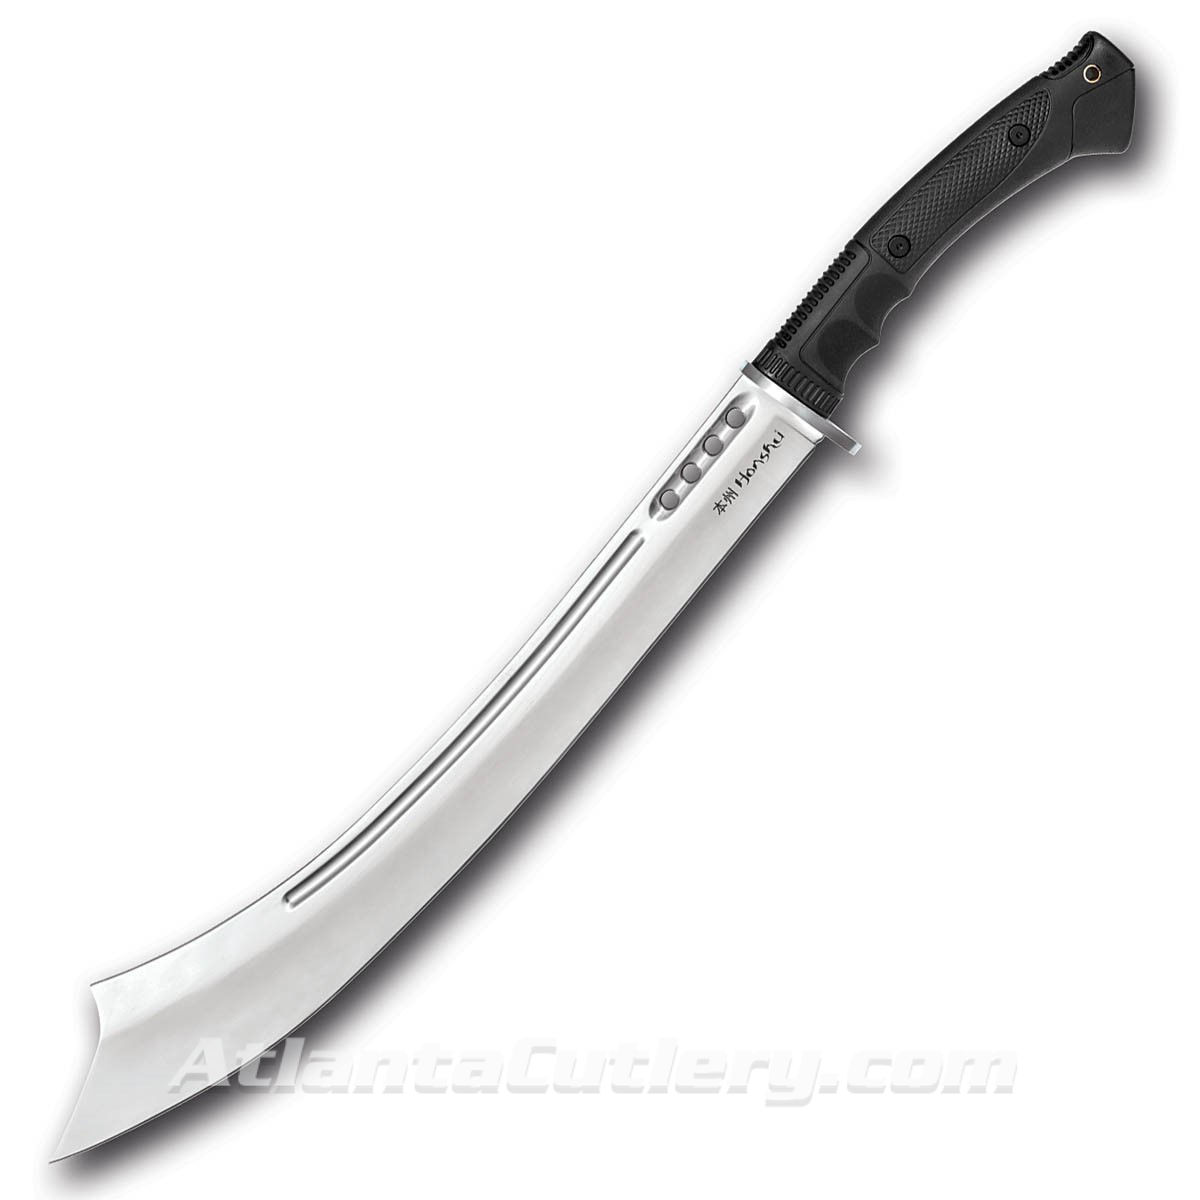 United Cutlery's Honshu War Sword